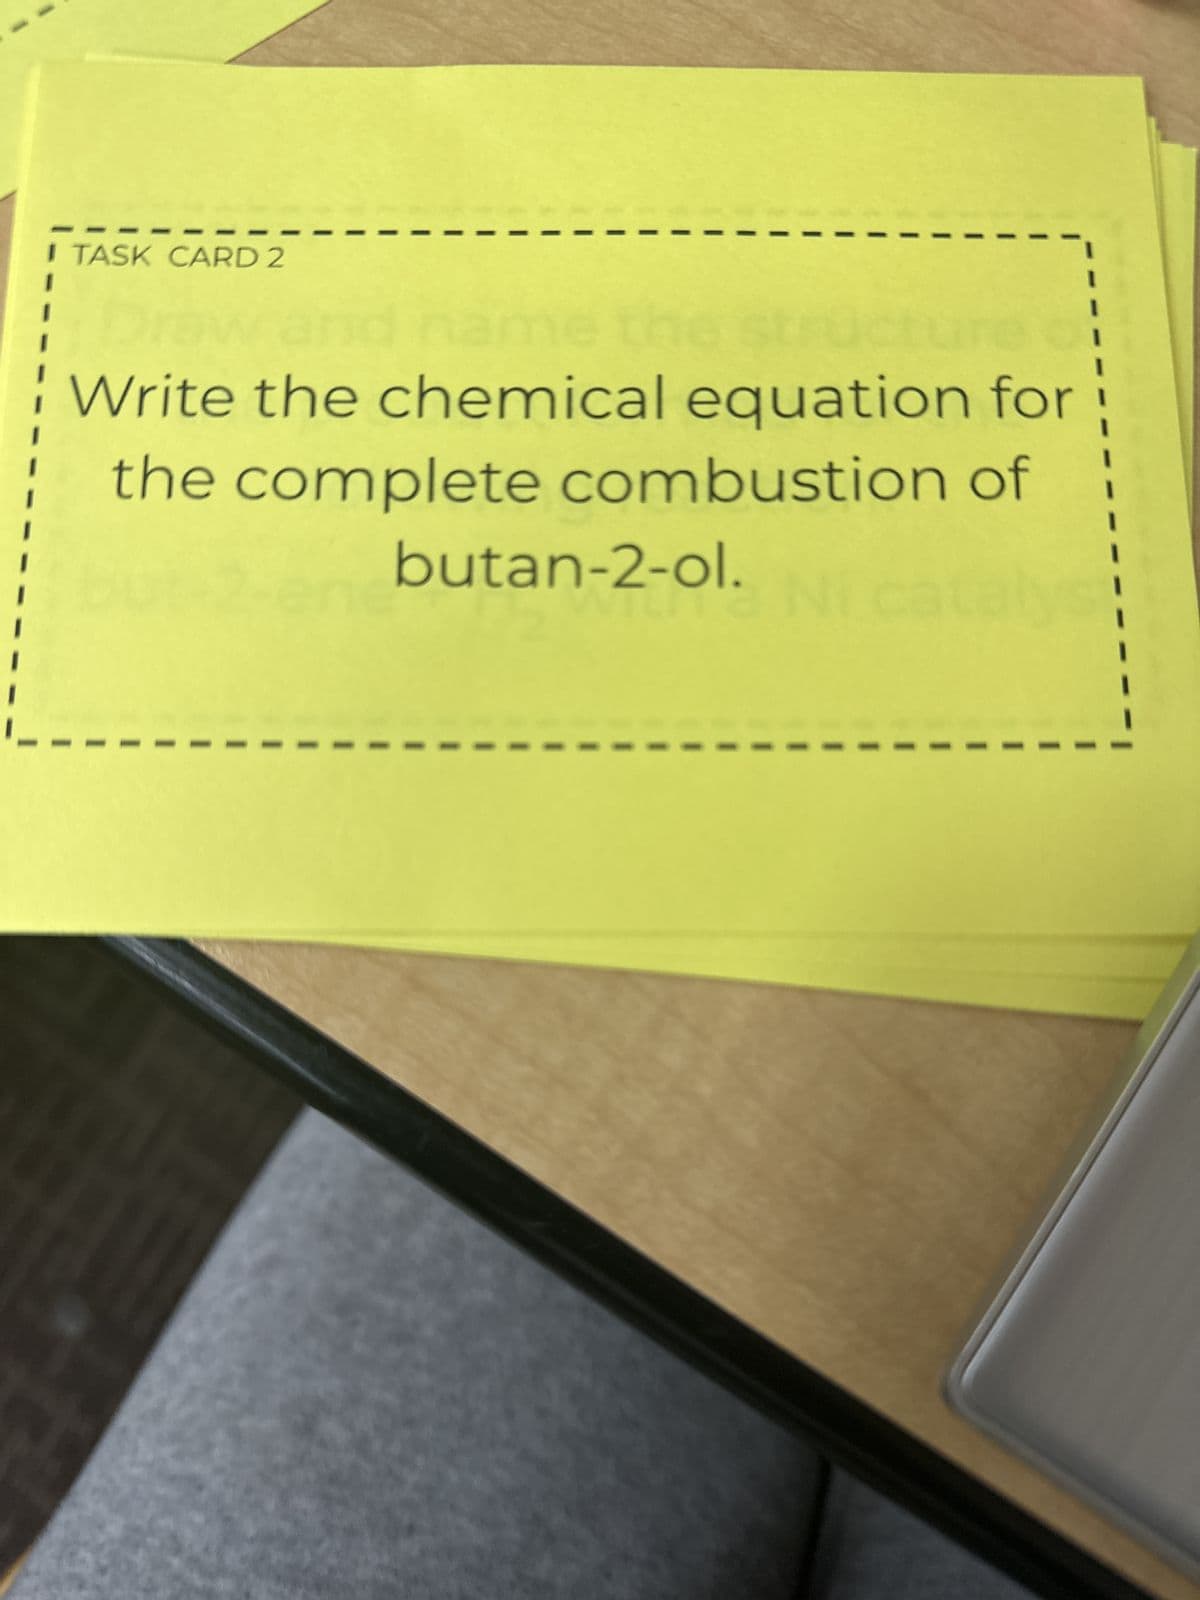 I TASK CARD 2
Write the chemical equation for
the complete combustion of
I
butan-2-ol.
I
I
I
I
I
I